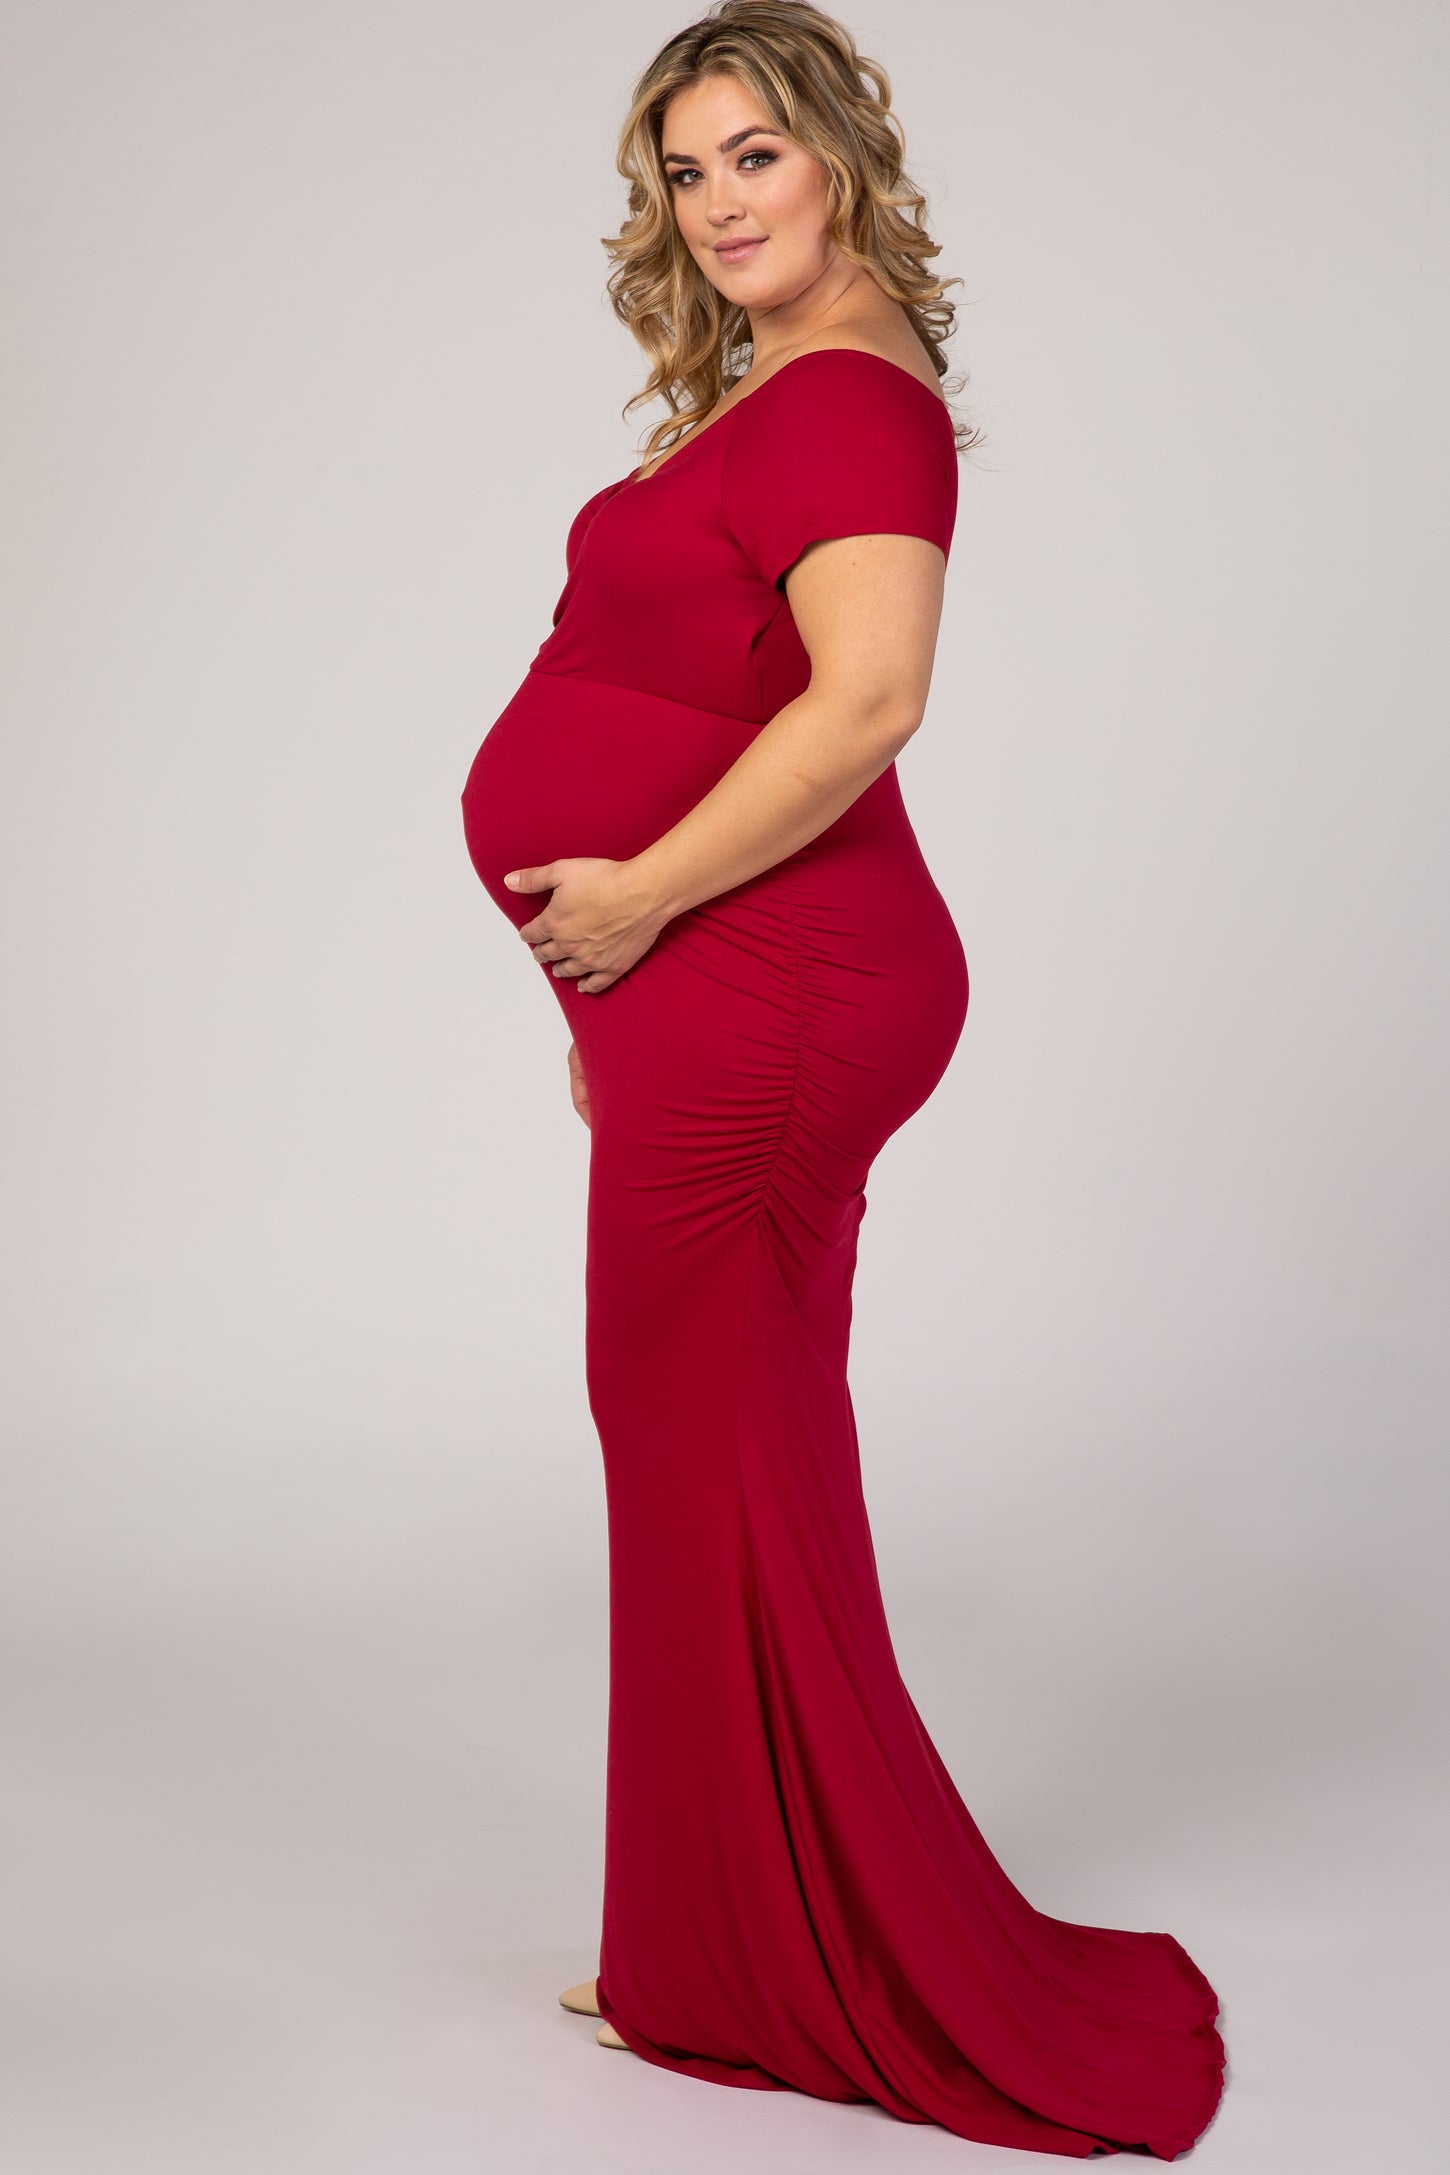 PinkBlush Burgundy Off Shoulder Wrap Plus Maternity Photoshoot Gown/Dress